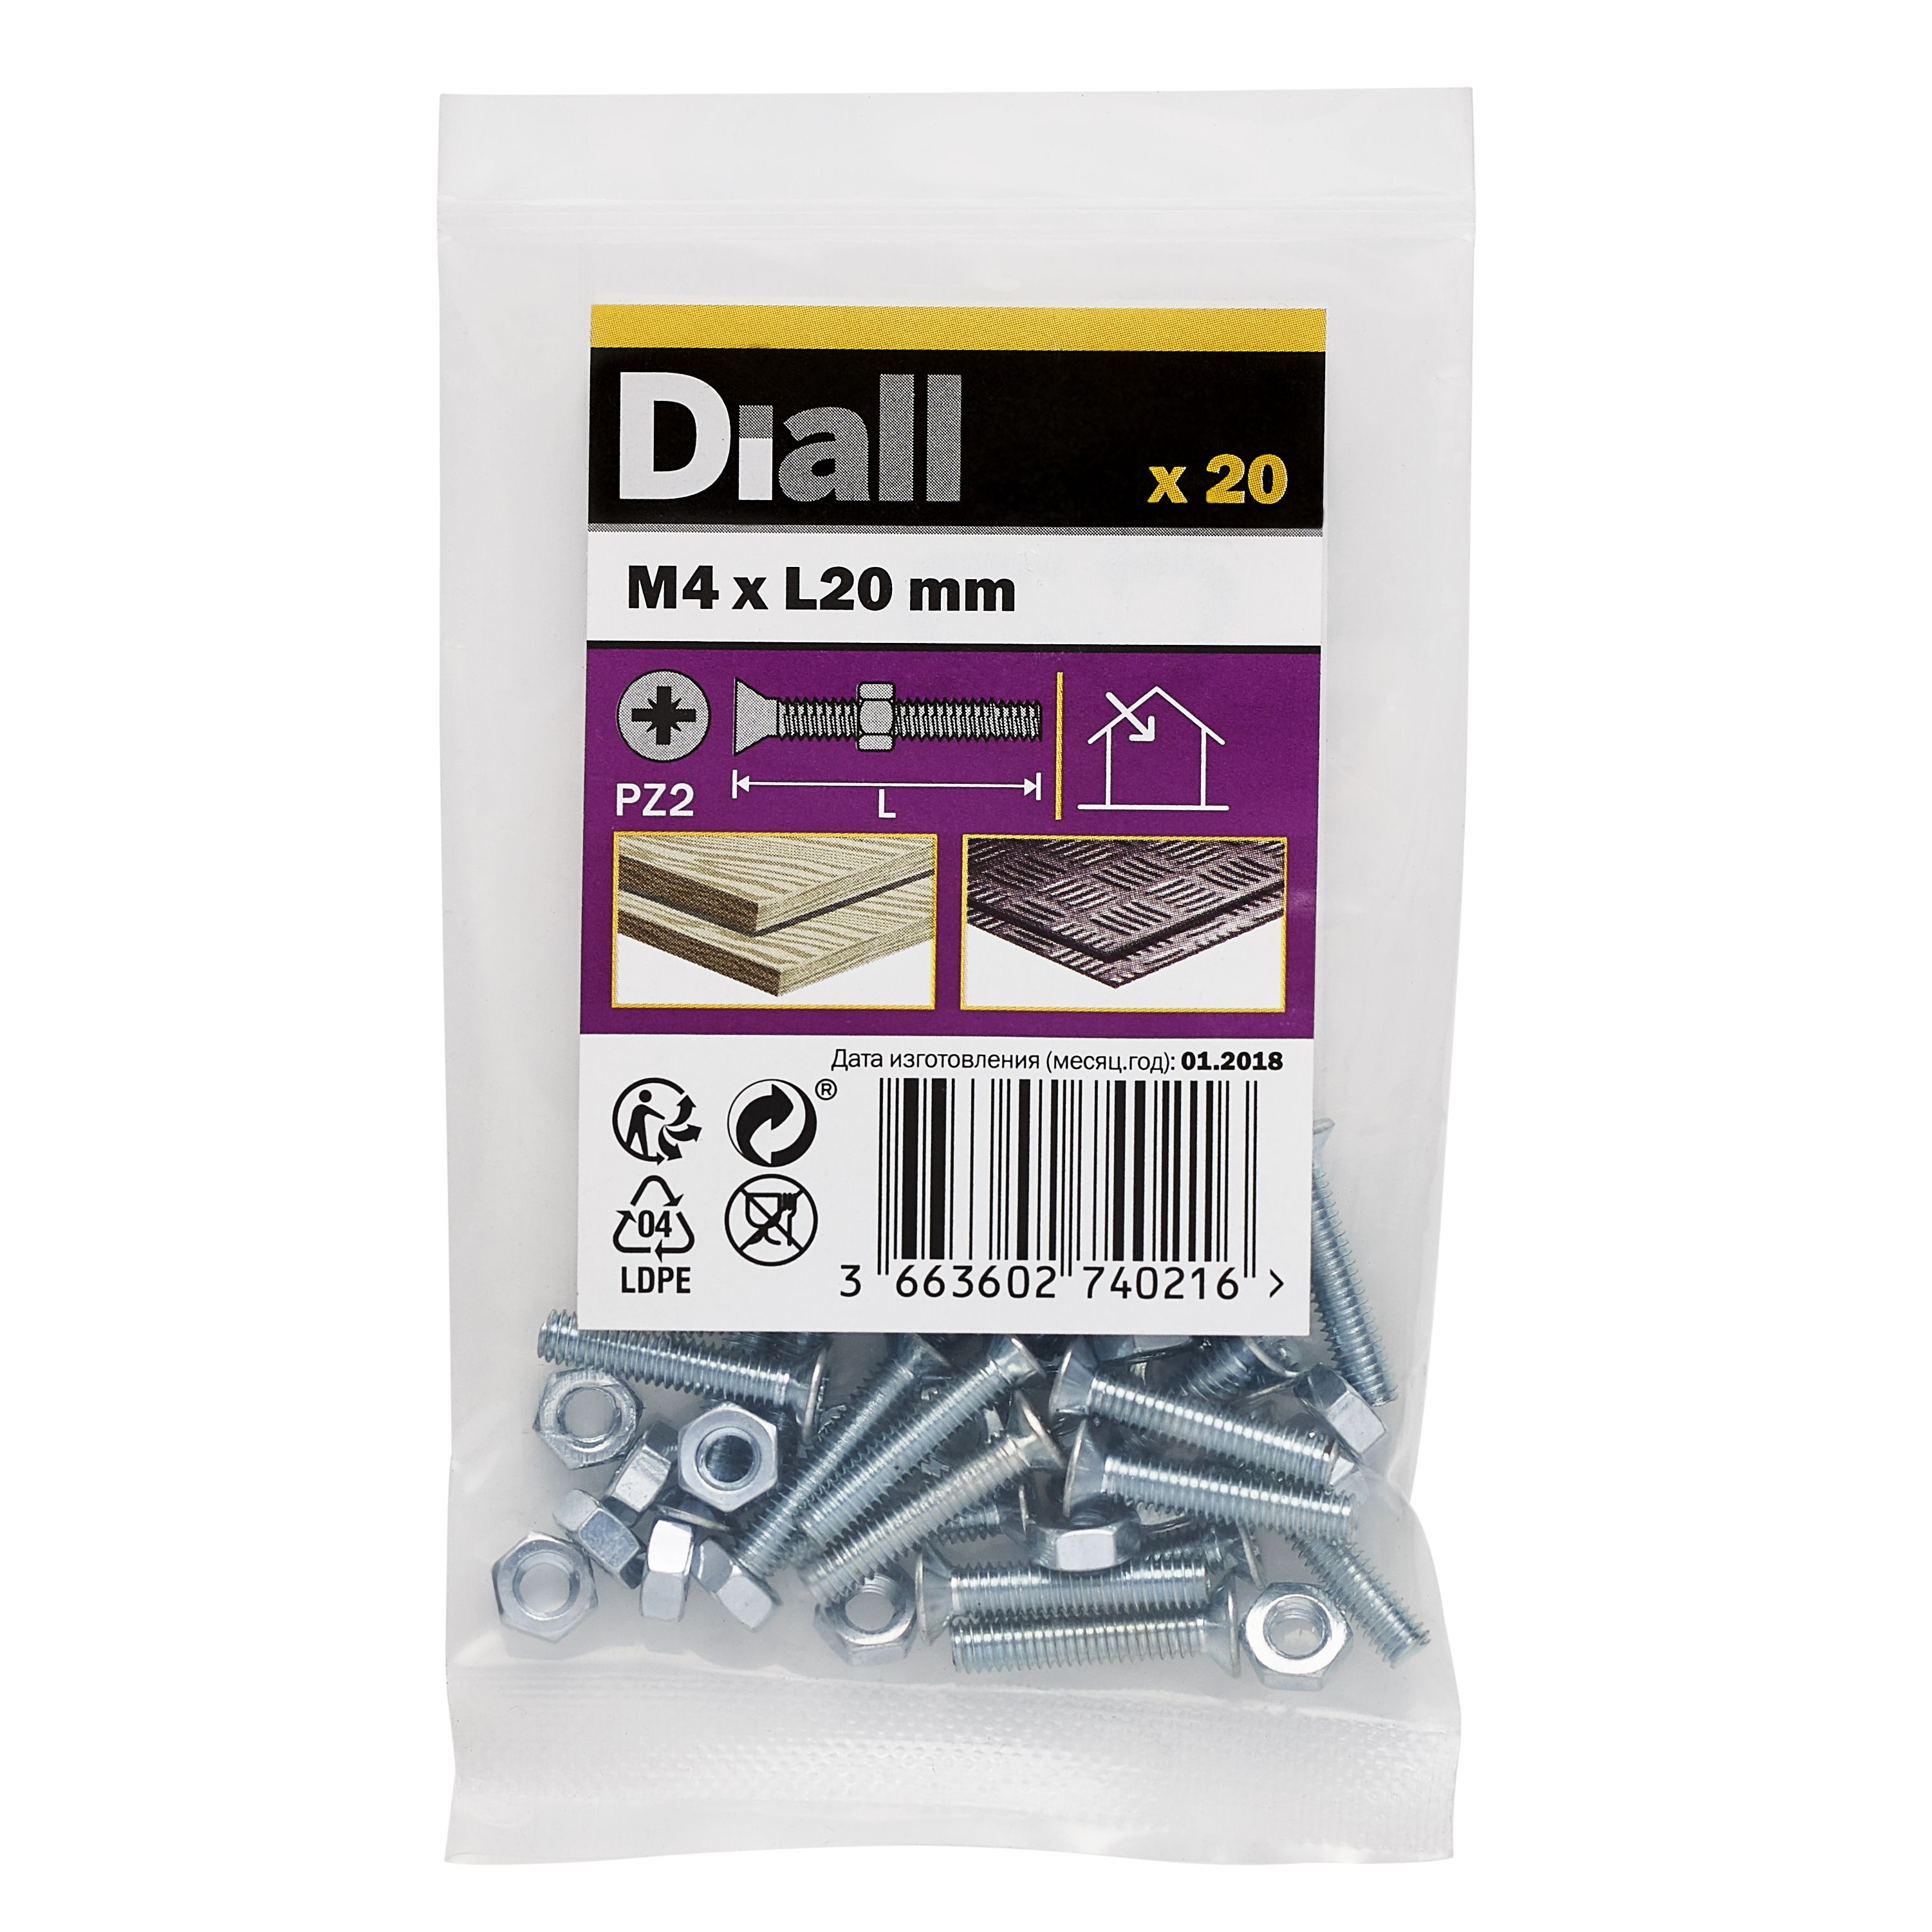 Diall M4 Pozidriv Countersunk Zinc-plated Carbon steel Machine screw & nut (Dia)4mm (L)20mm, Pack of 20